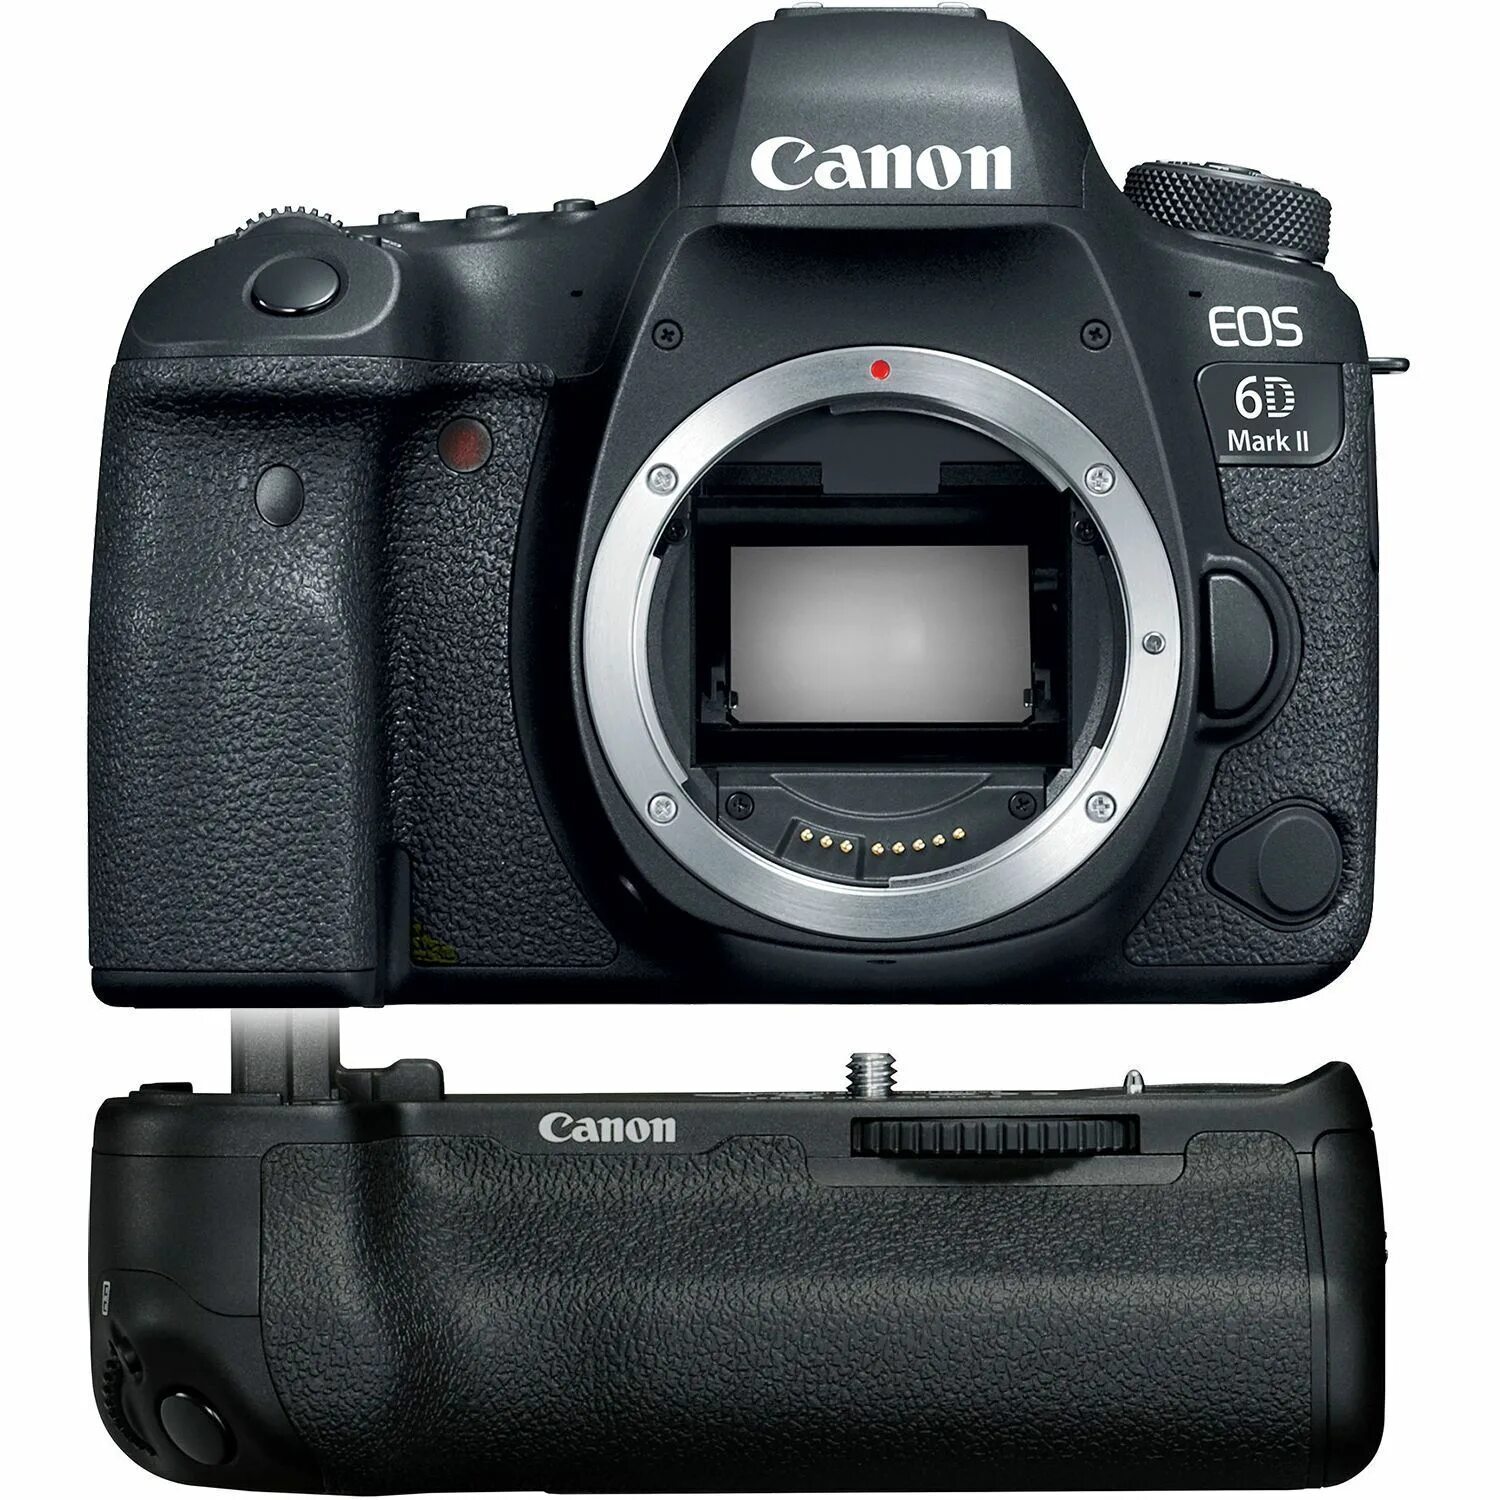 6 d. Canon 6d Mark II. Фотоаппарат Canon EOS 6d Mark II. Фотоаппарат Canon EOS 6d Mark II Kit. Canon EOS r6 Mark II.